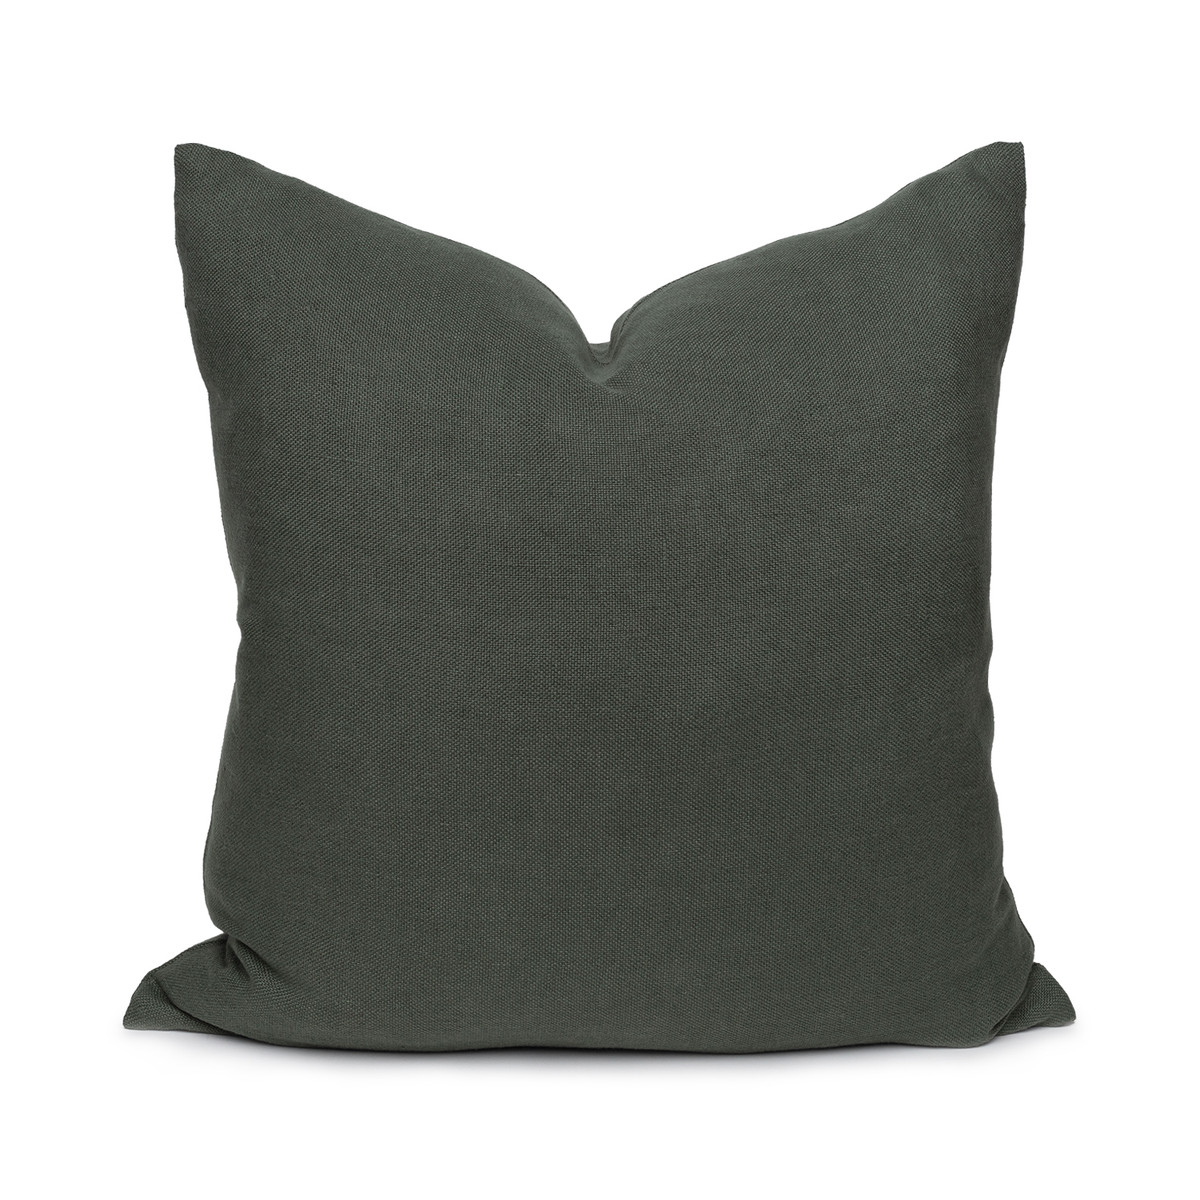 Euro Natural Pure linen Pillow - Front